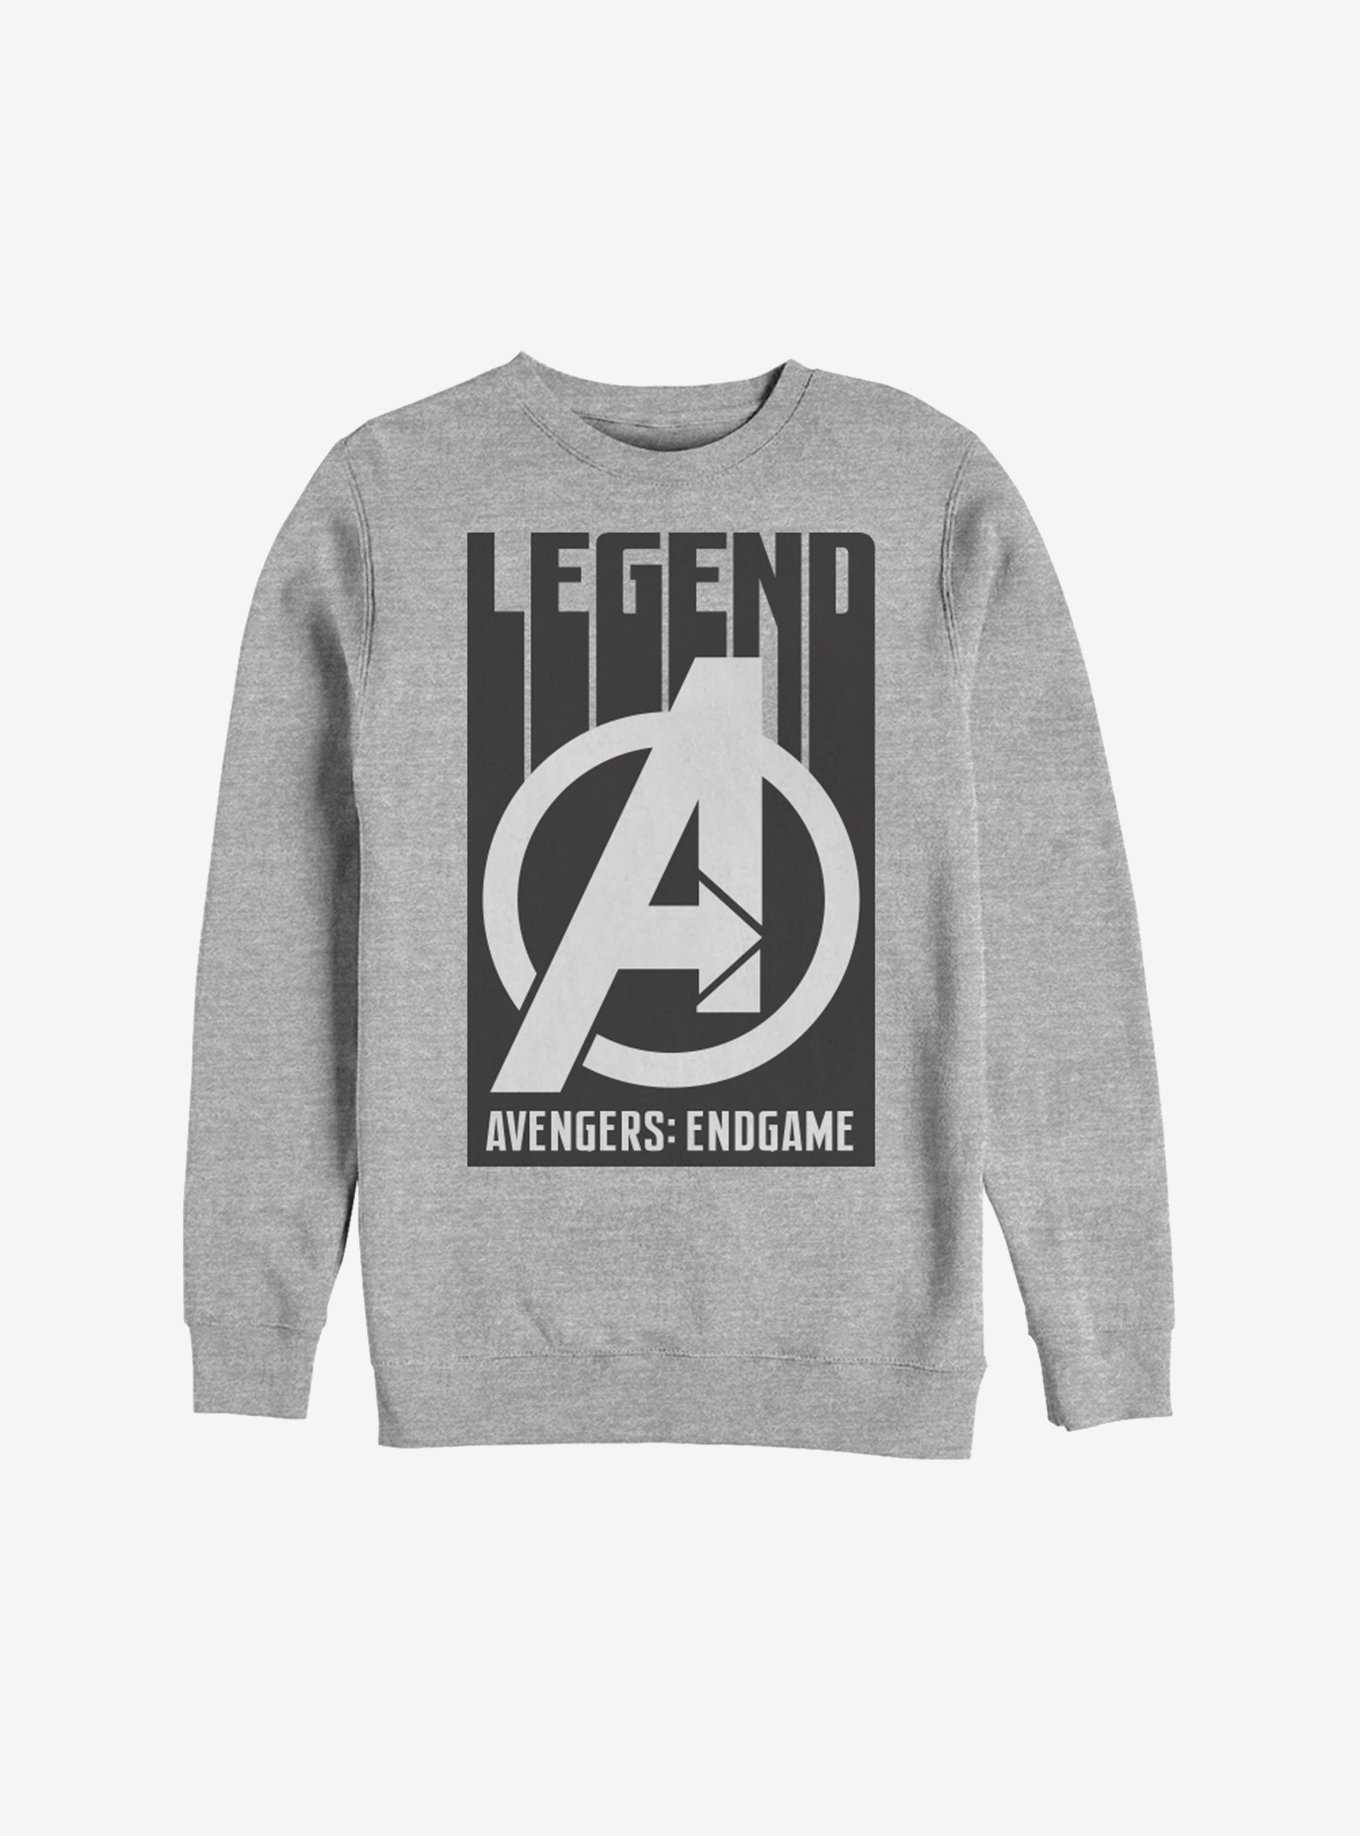 Marvel Avengers: Endgame Legend Sweatshirt, , hi-res